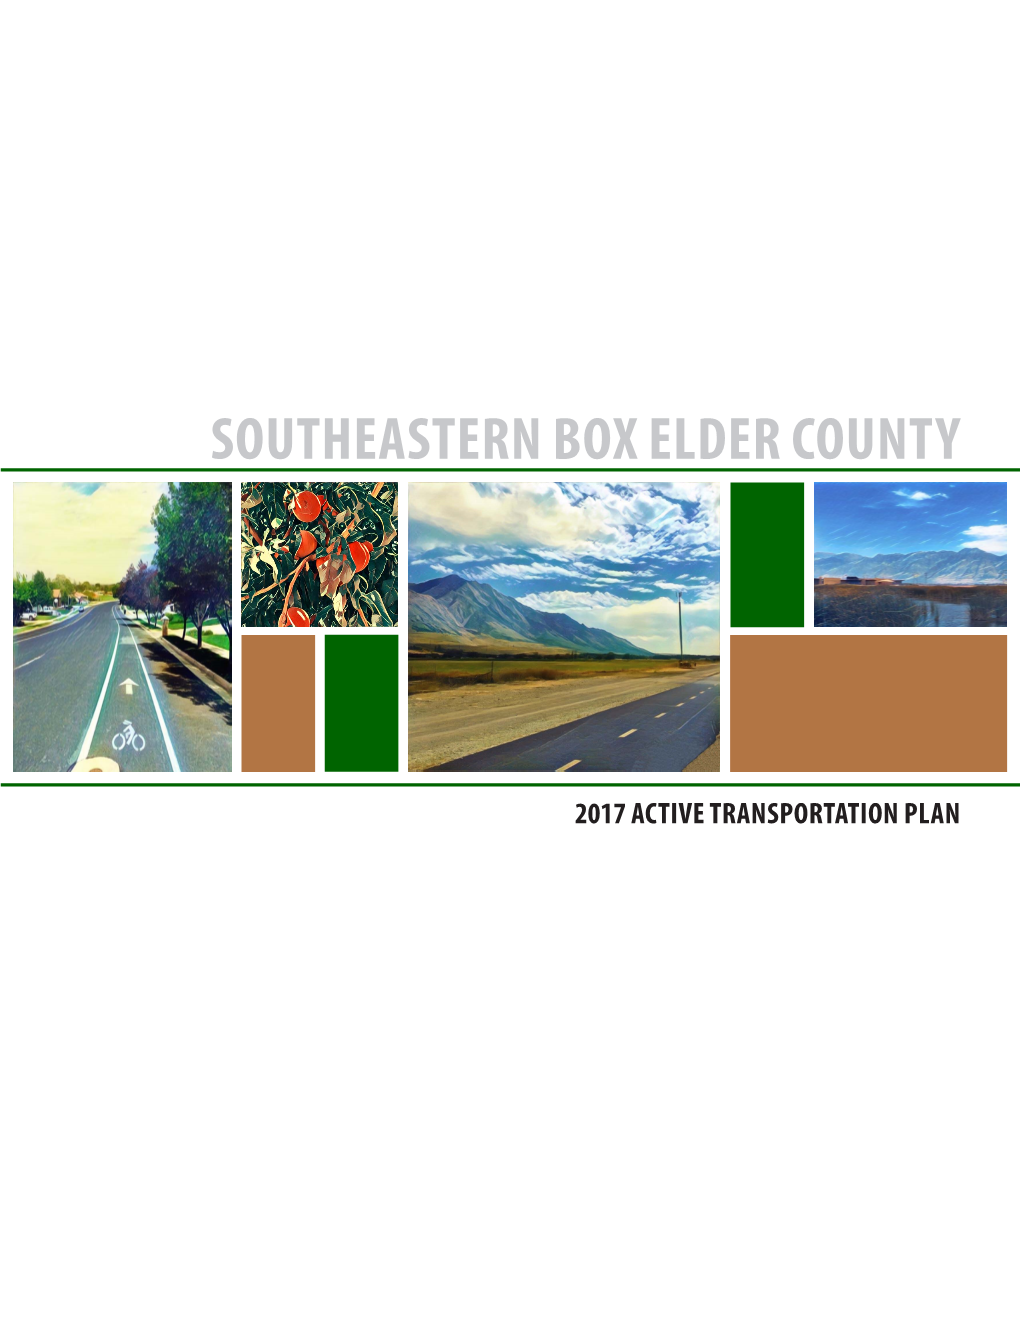 Southeastern Box Elder County Transportation Plan 2017